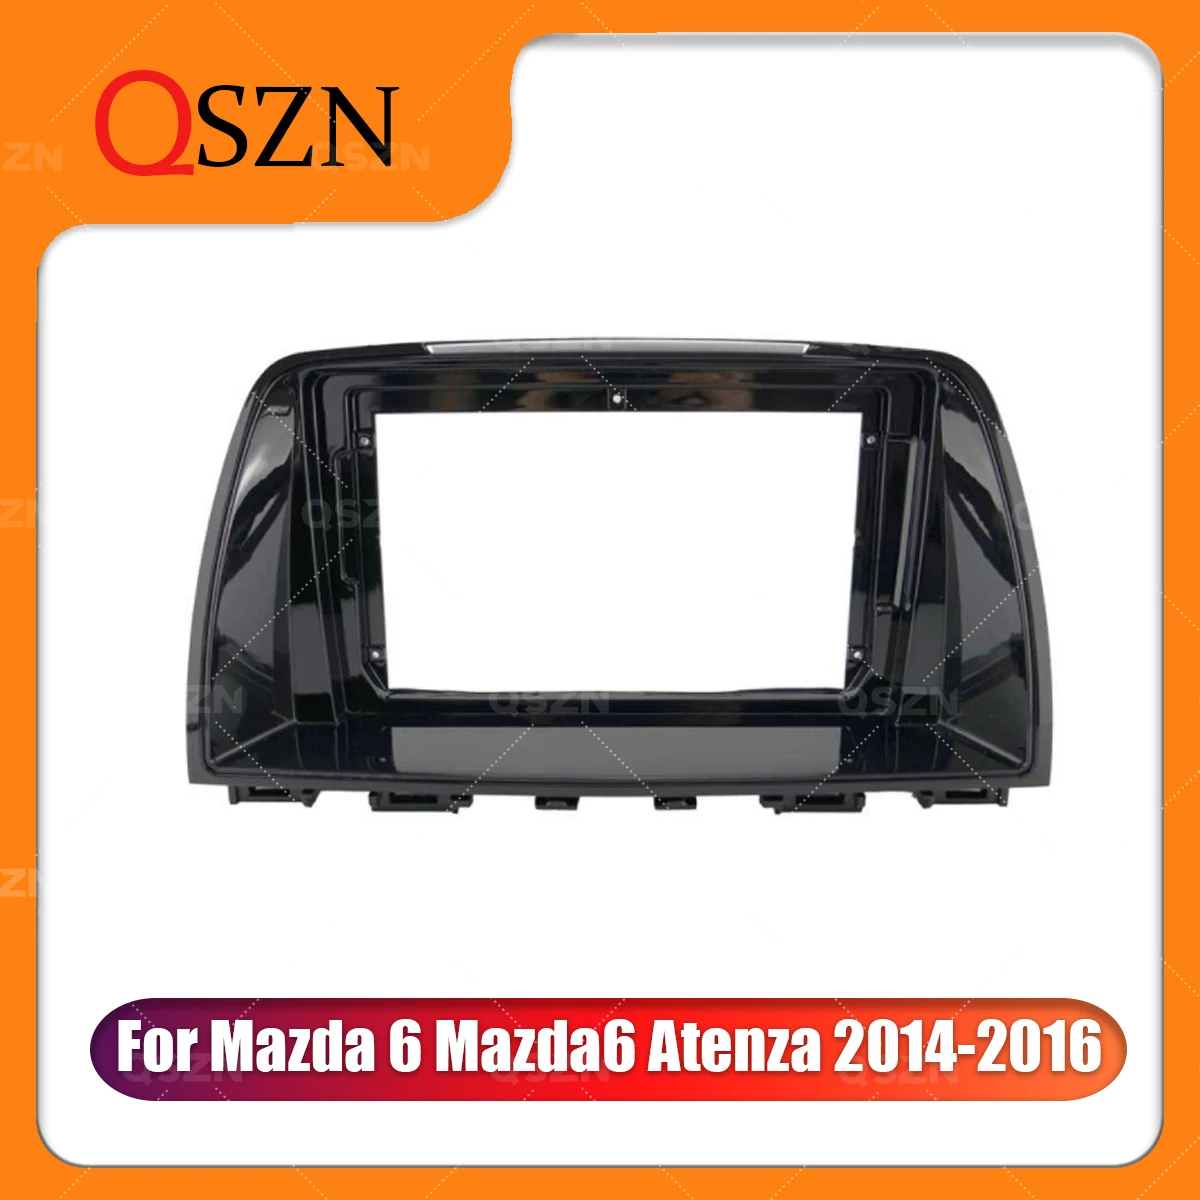 QSZN Car radio Fascias Panel For Mazda 6 Mazda6 Atenza 2014-2016 9 inch Frame Audio Dash Fitting Panel Kit Big Screen 2 Din